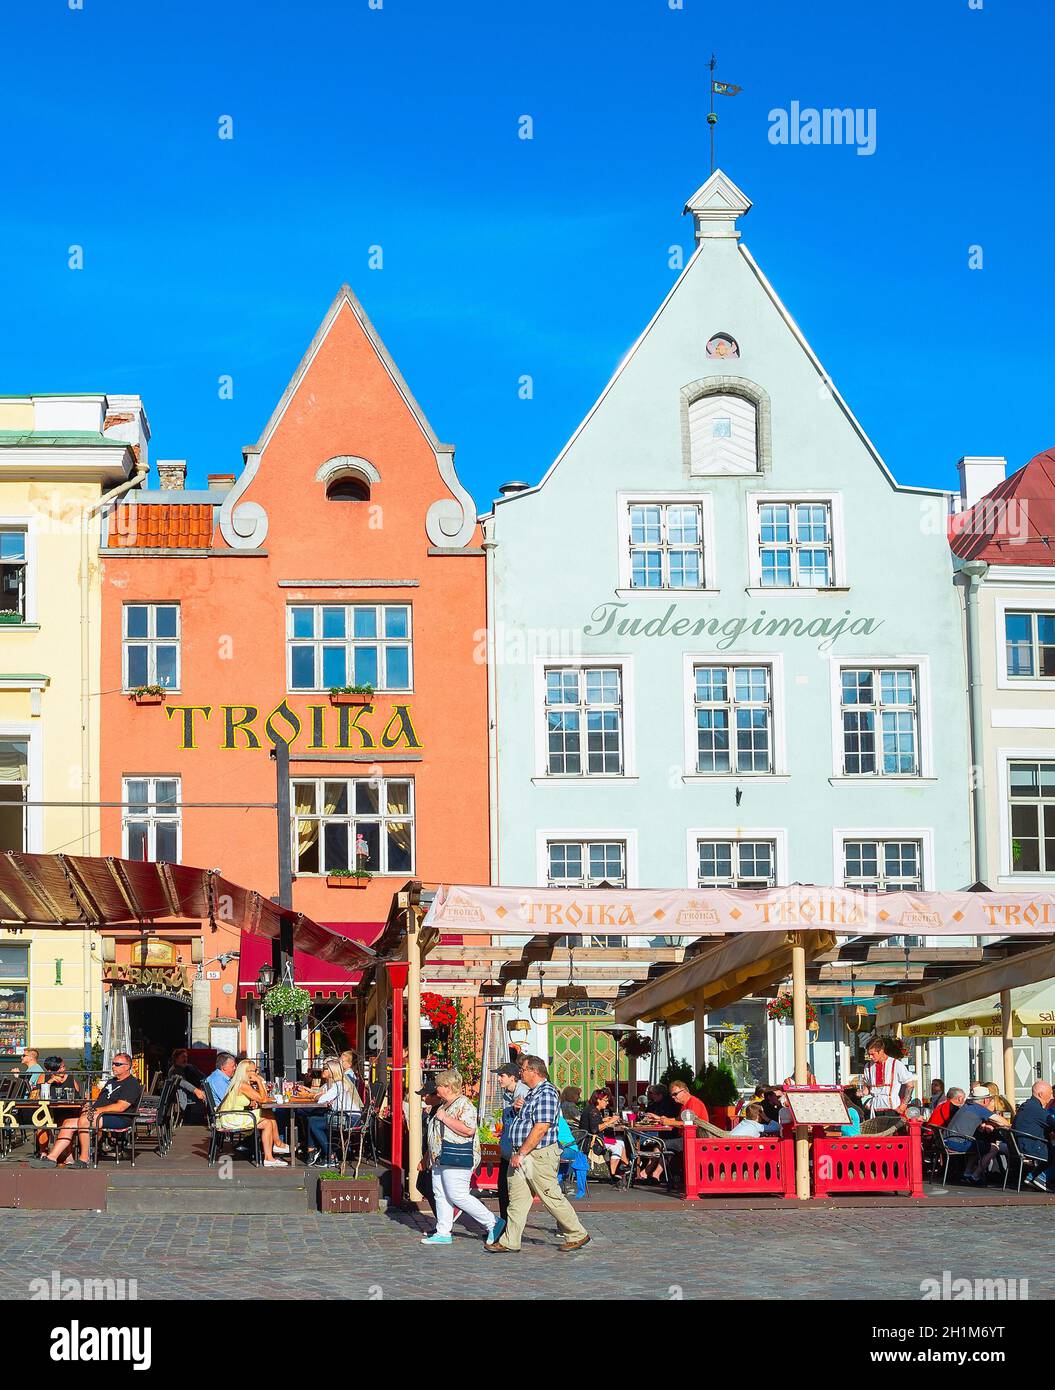 TALLINN, ESTONIA - JULY 14, 2019: Tourists at famous Town Hall Square in Tallinn, Estonia Stock Photo